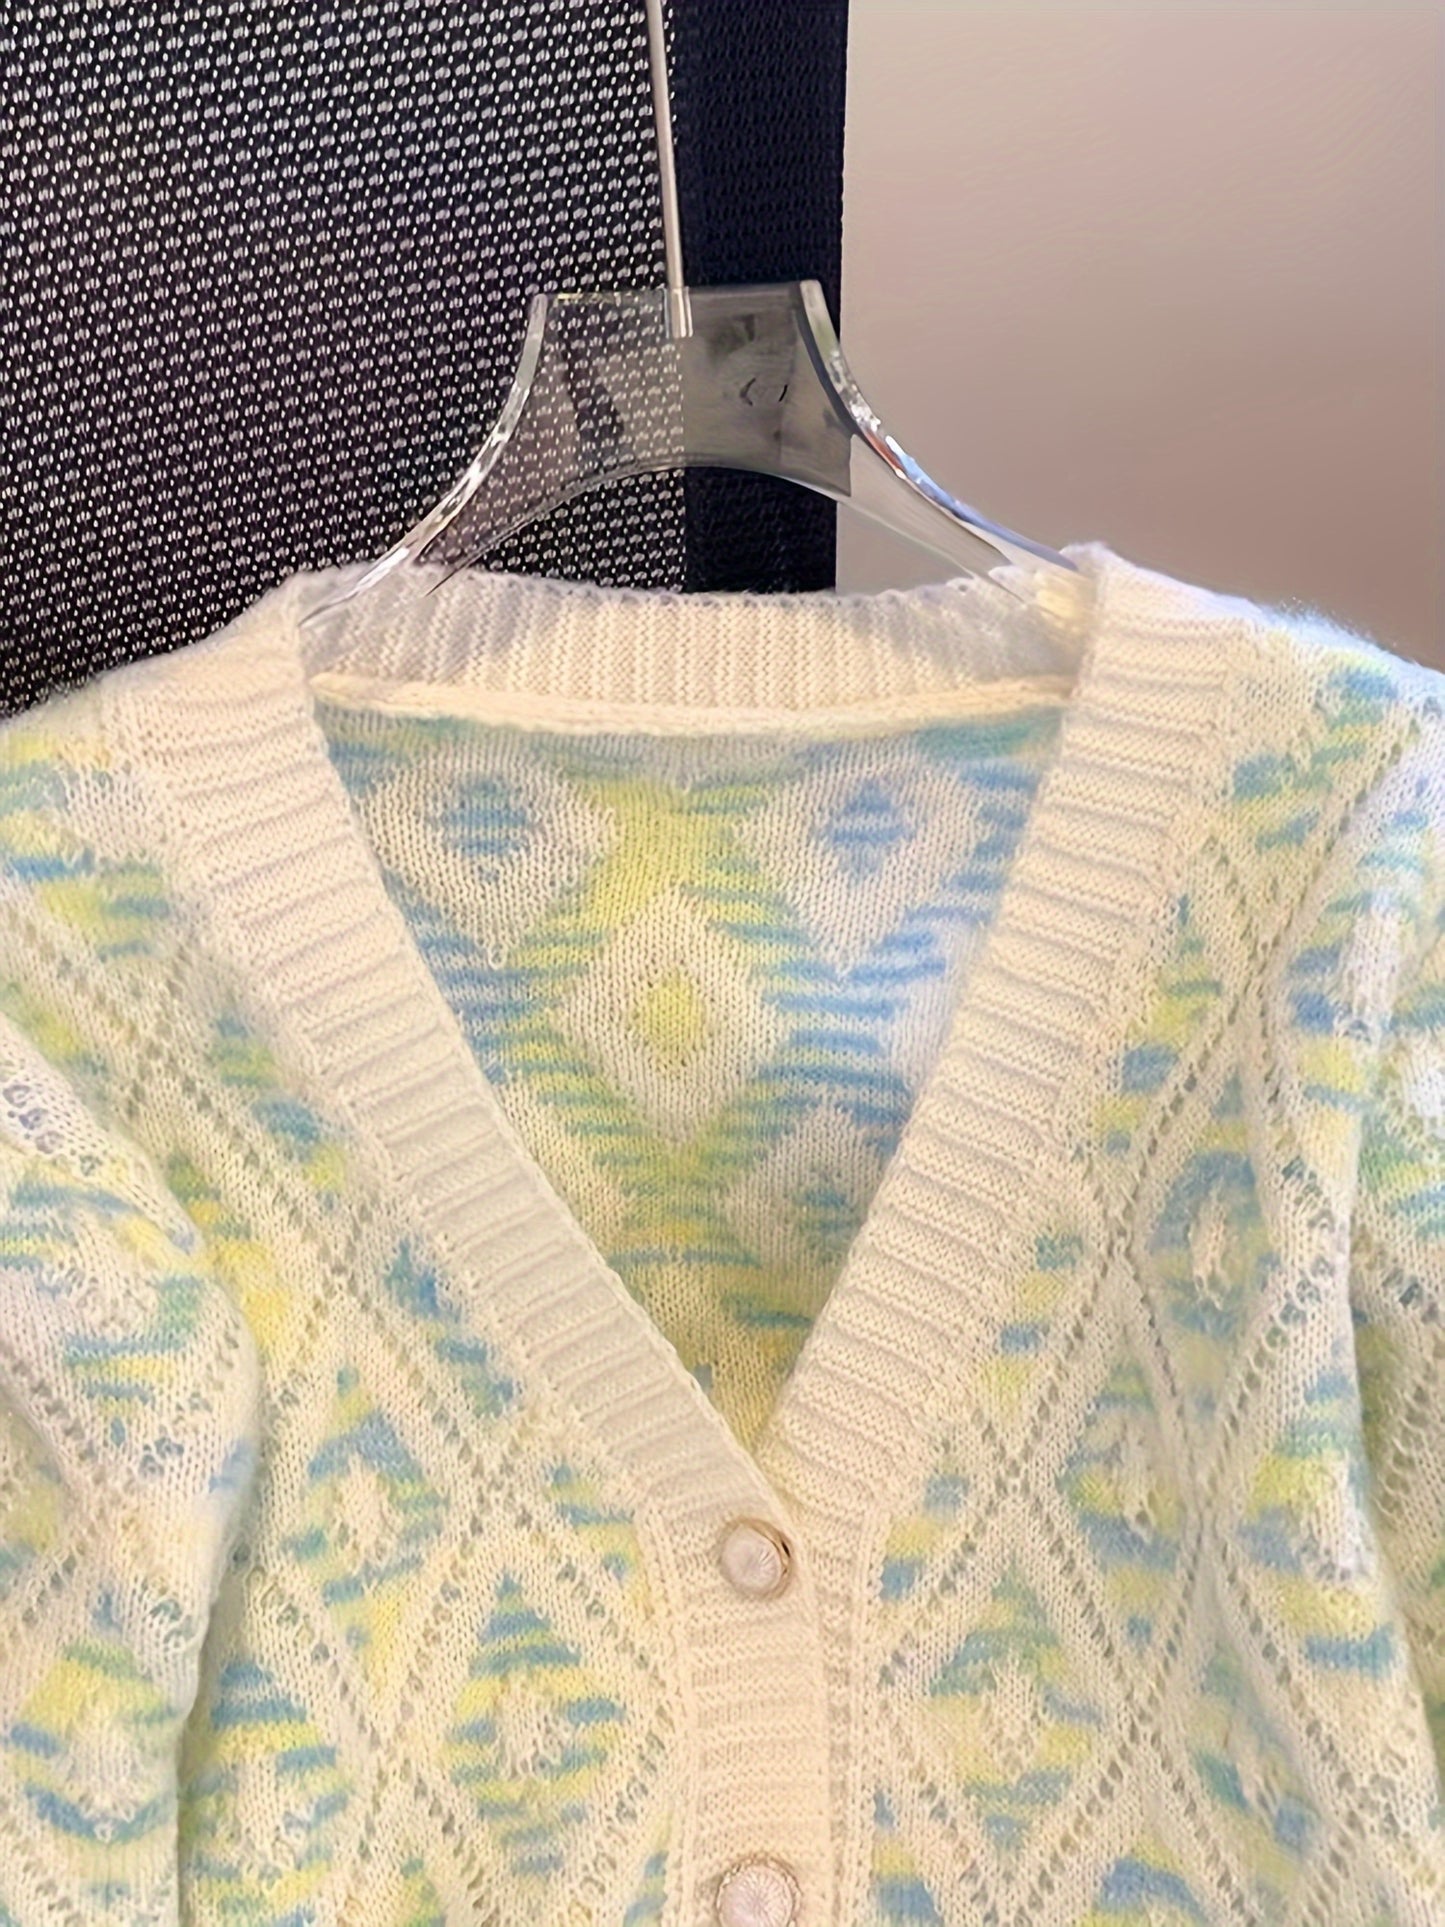 Antmvs Argyle Pattern Button Down Knit Cardigan, Elegant V Neck Long Sleeve Sweater, Women's Clothing